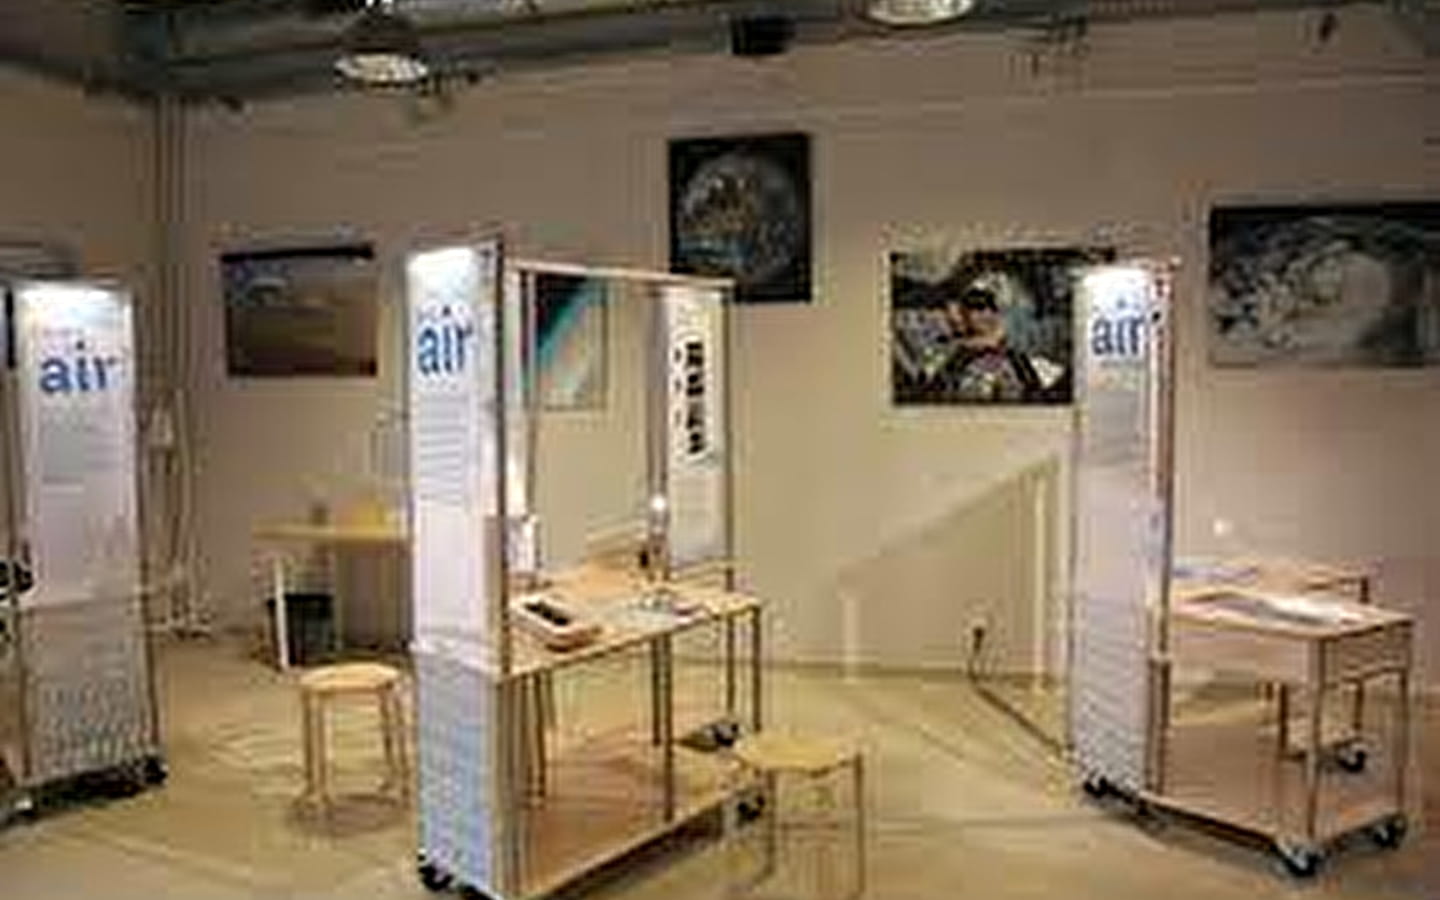 EXPOSITION : AIR, L'EXPO QUI INSPIRE